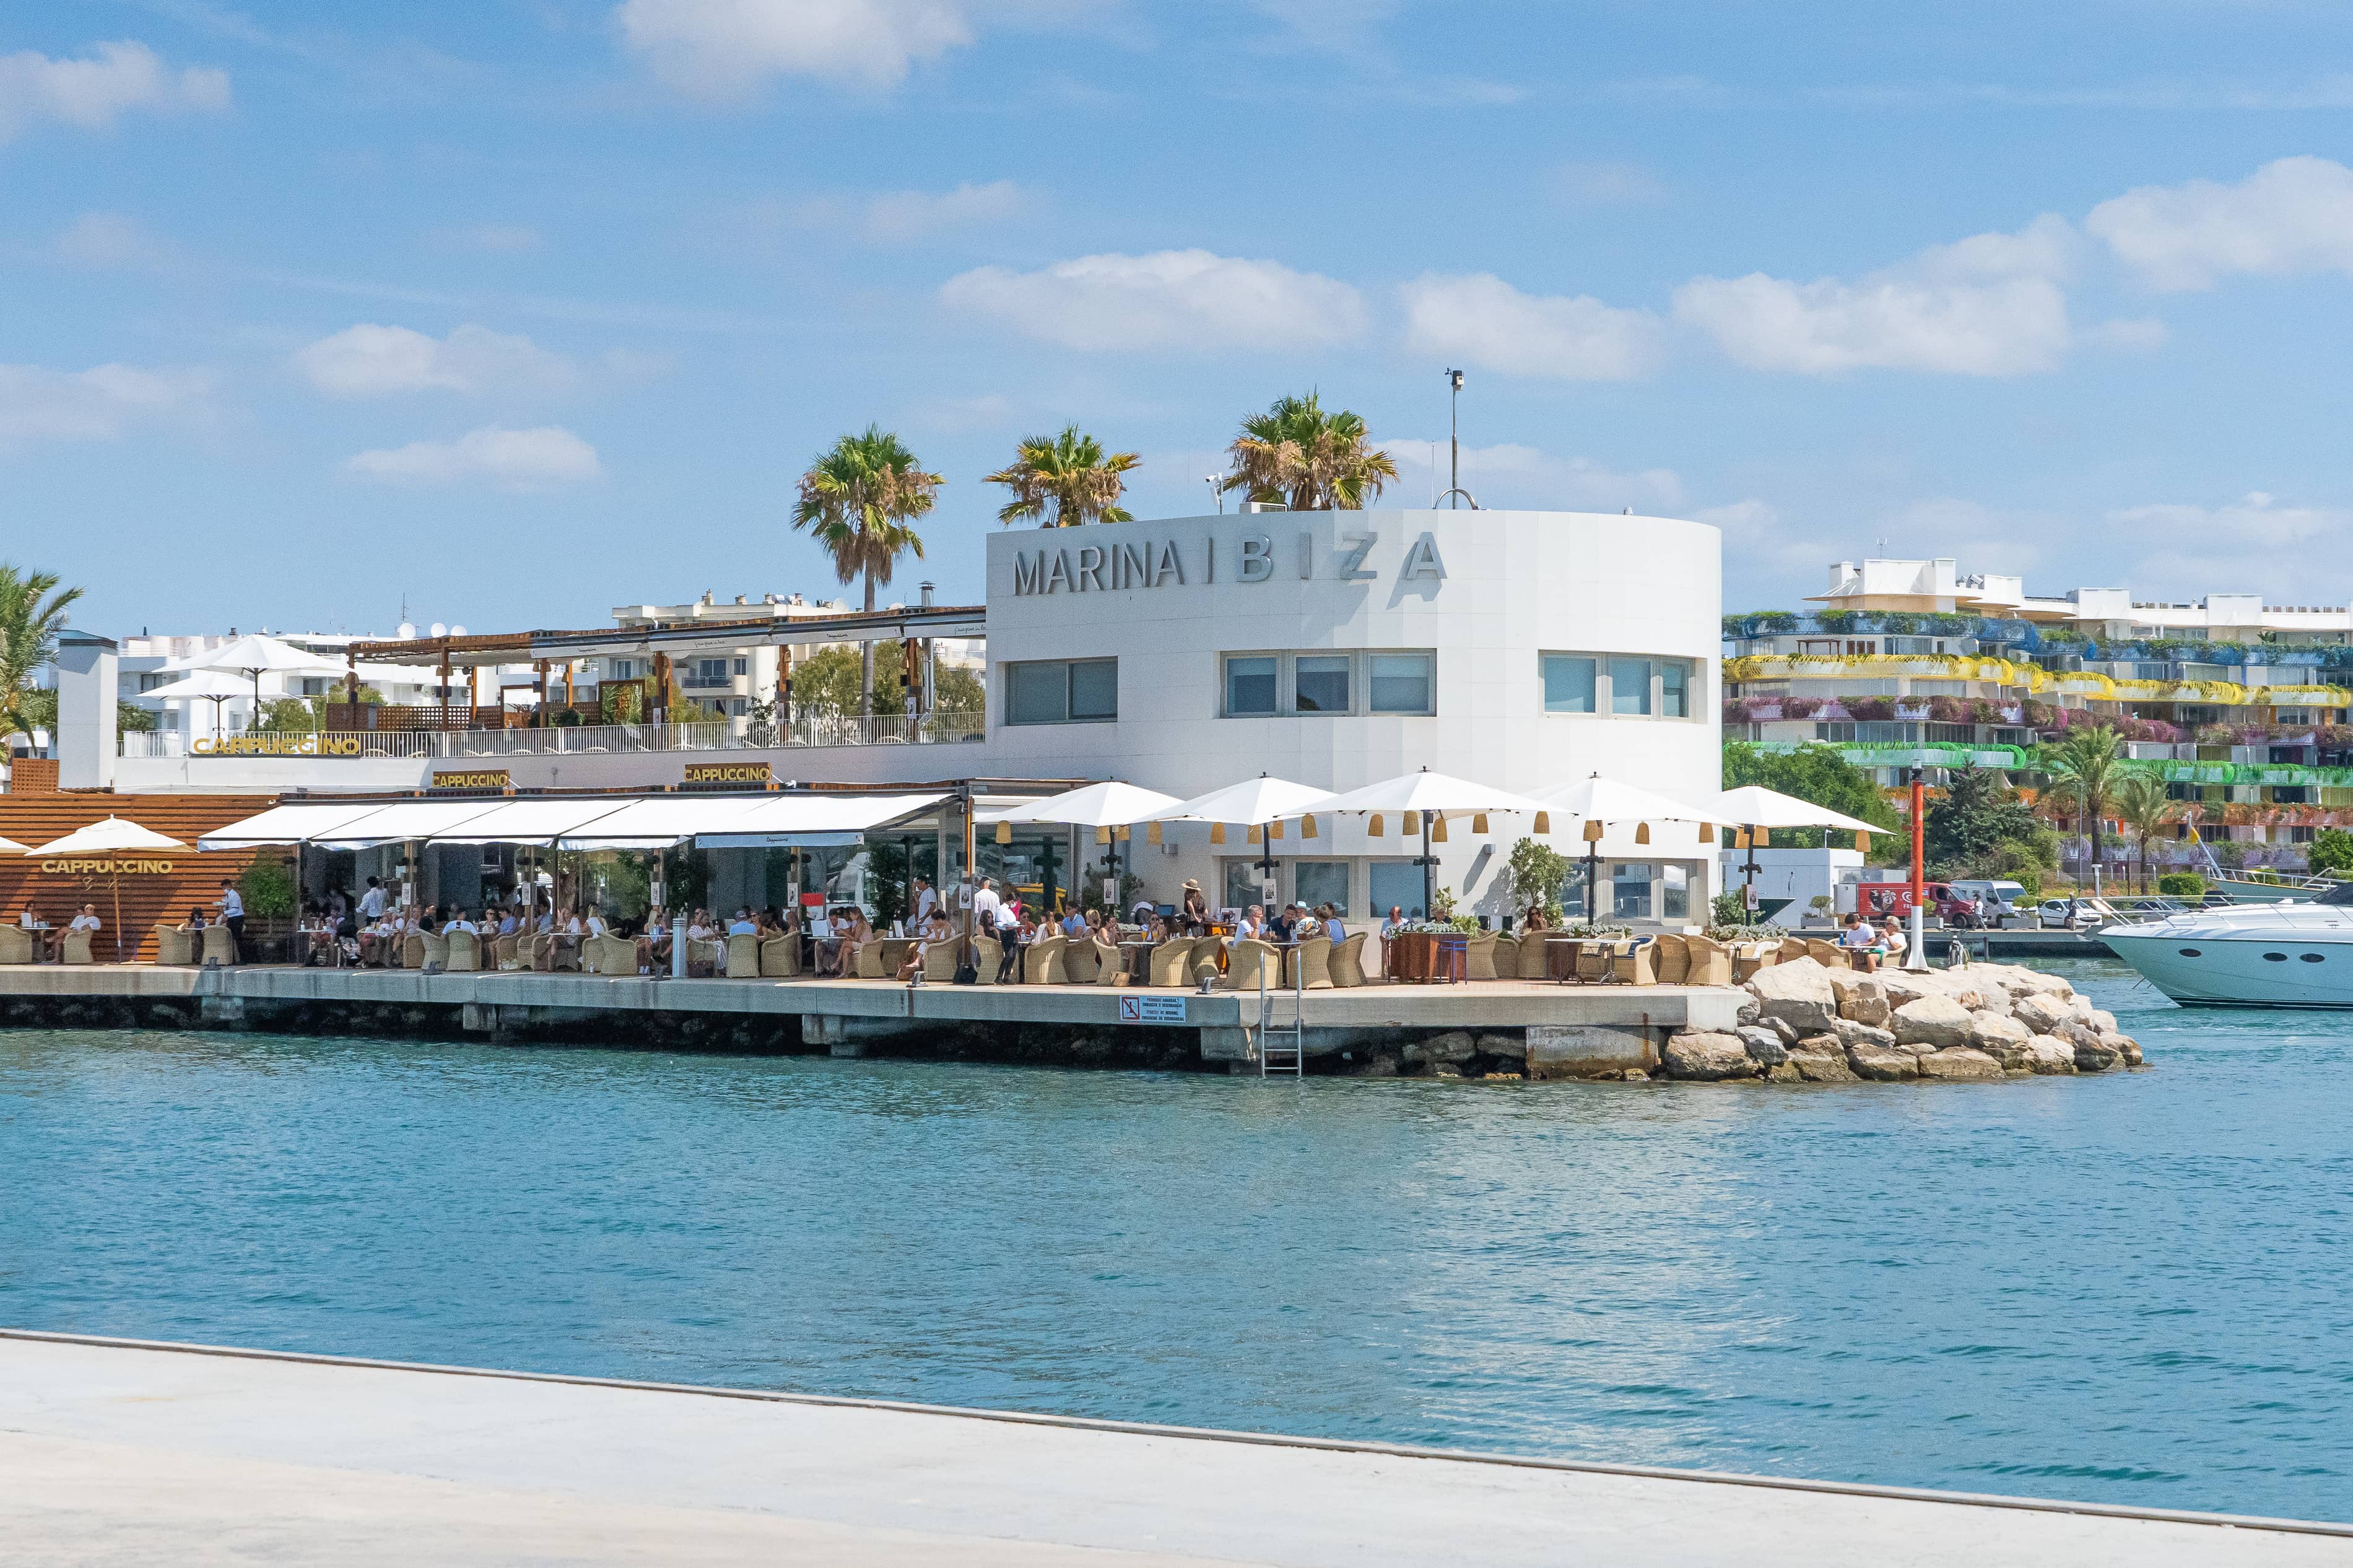 Marina Ibiza, ROTO, CALMA, NAUTICA, MARINA, LIFESTYLE, lio, shopping, gastronomia, capuccino, concie